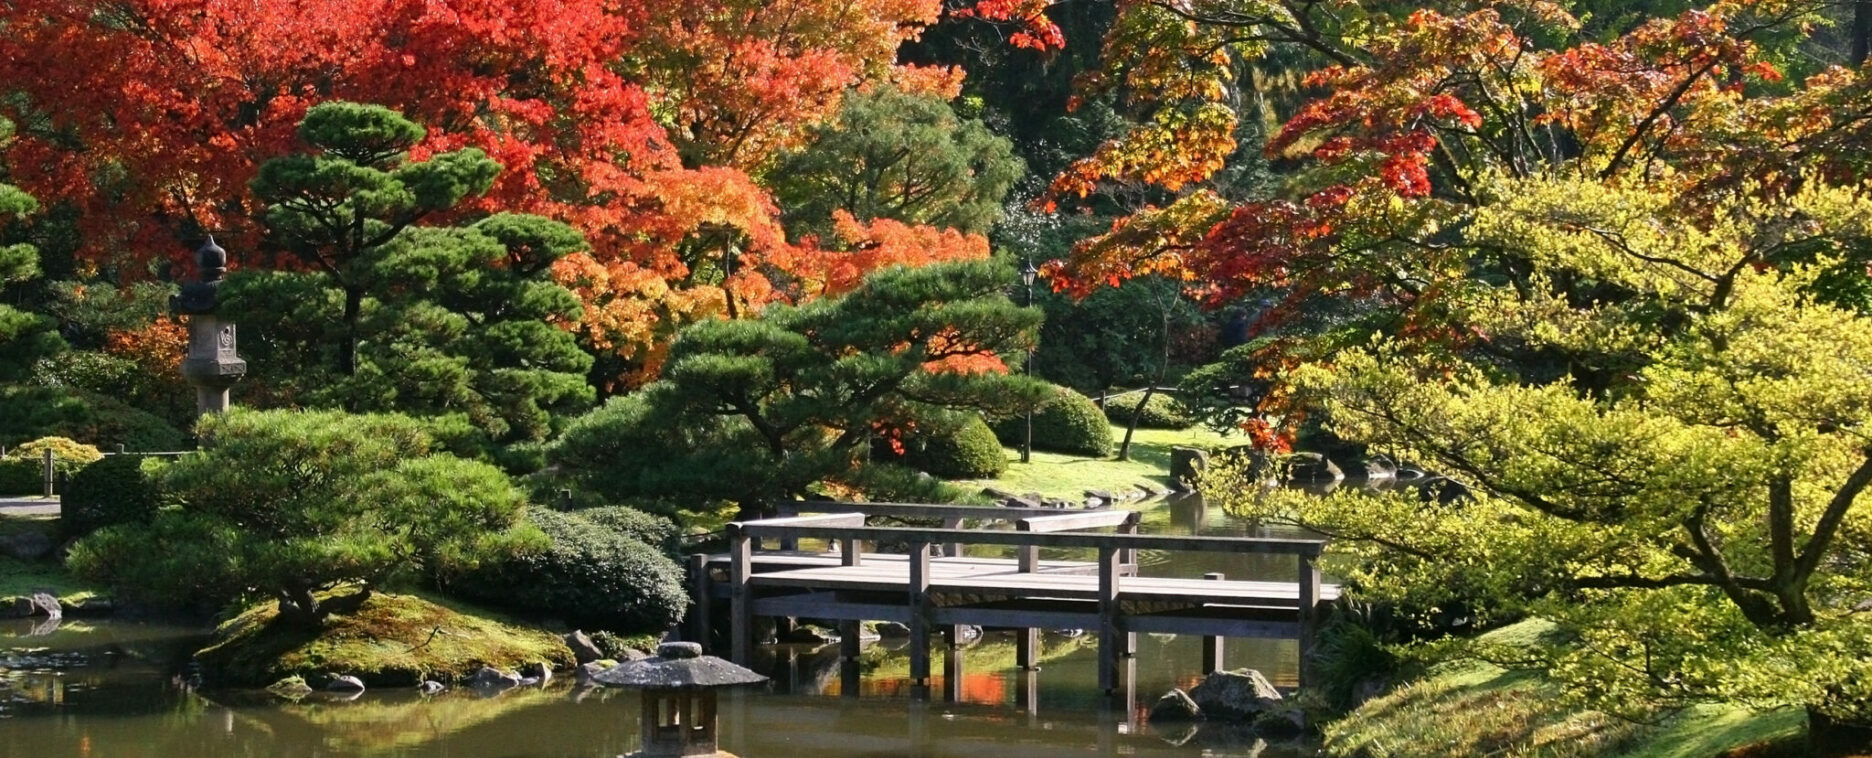 Arboretum,Seattle Japanese Garden at Washington Park